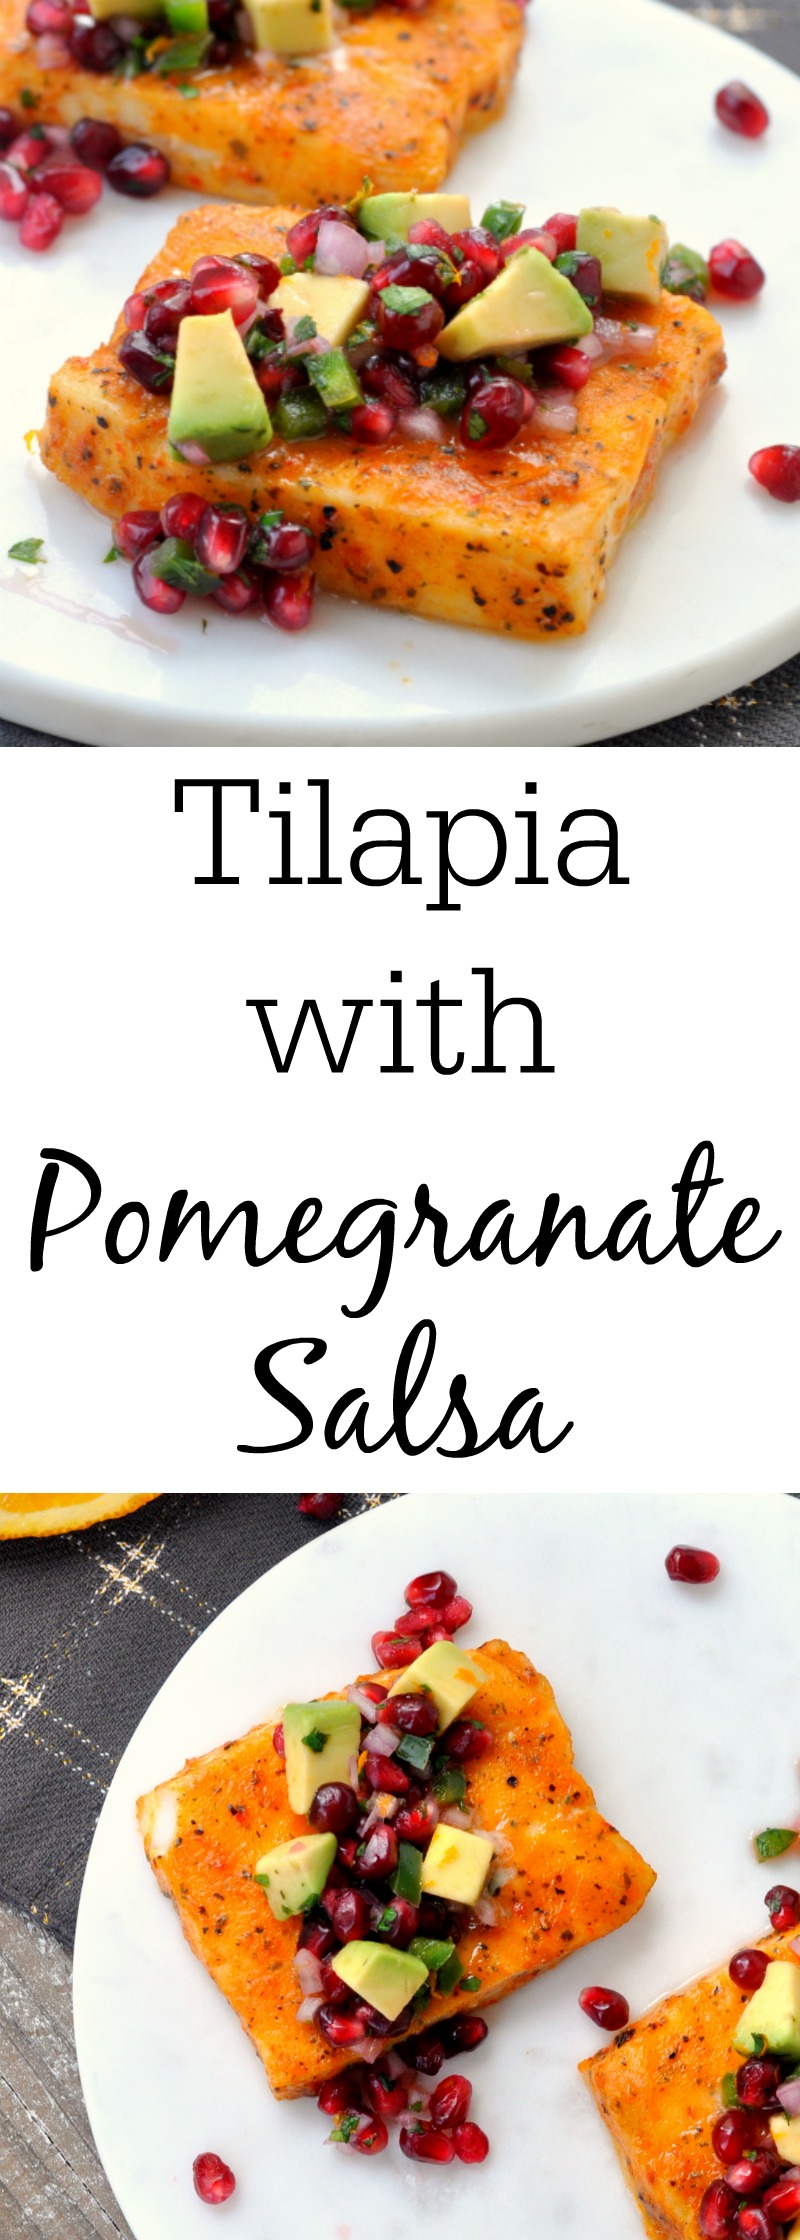 Tilapia with Pomegranate Avocado Salsa Photo Collage